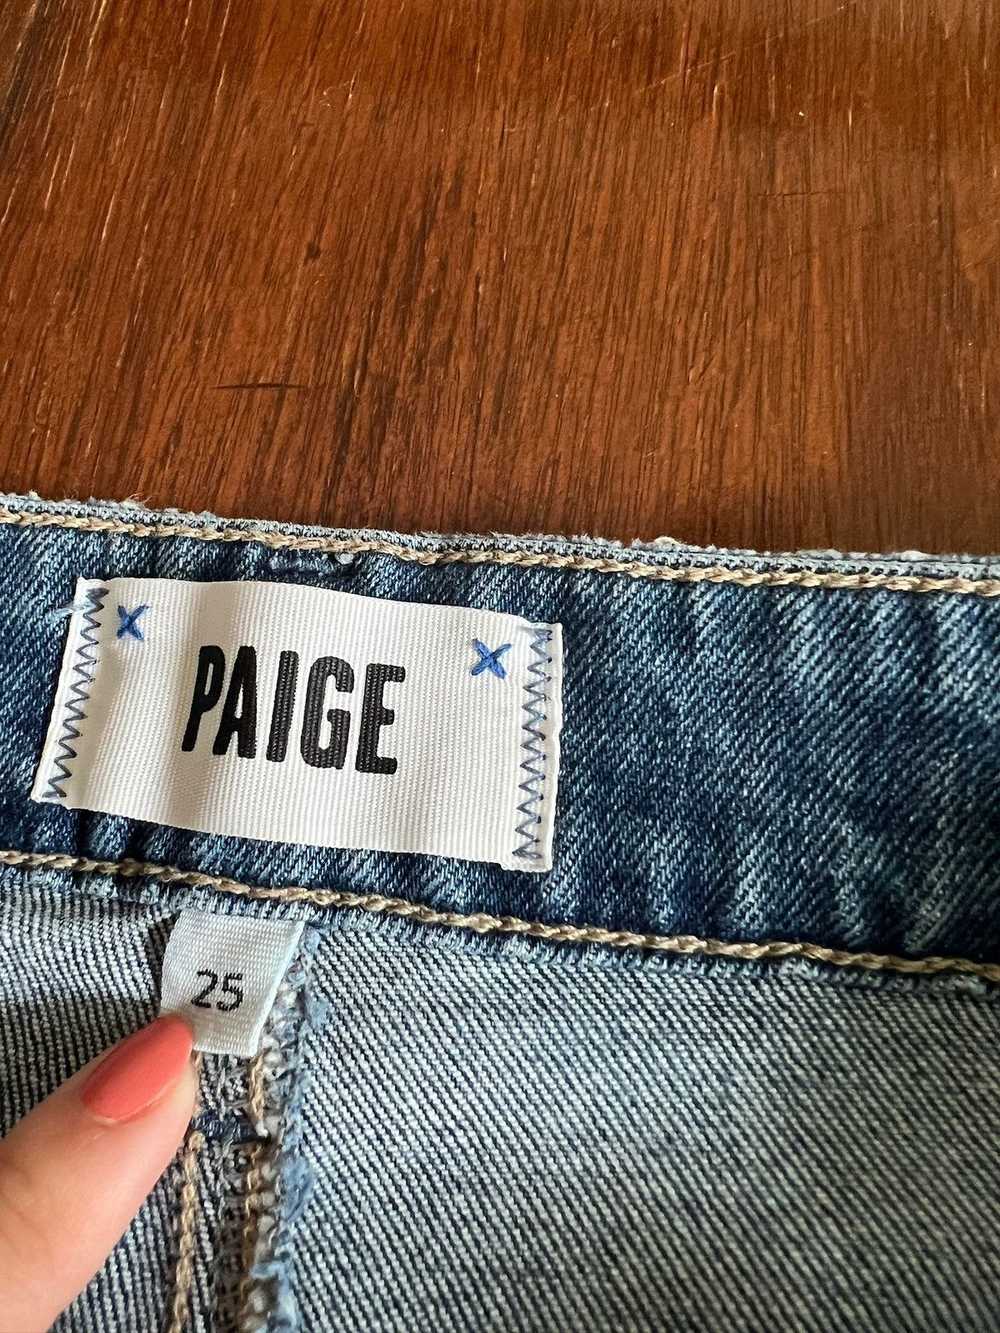 Paige PAIGE - Wide Flare Jeans - Size 25 - image 4